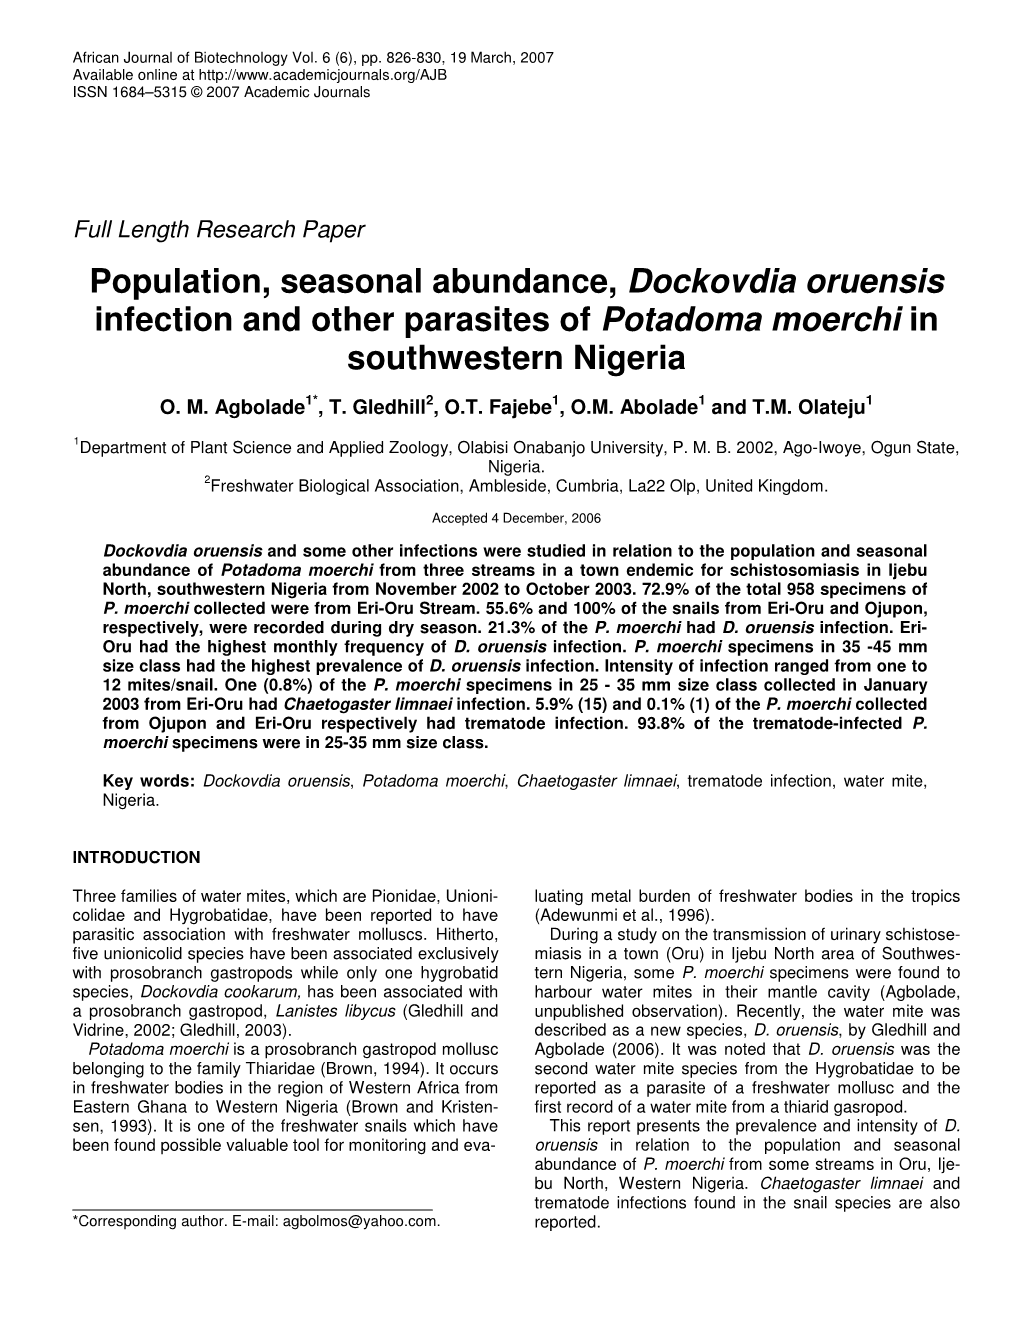 Population, Seasonal Abundance, Dockovdia Oruensis Infection and Other Parasites of Potadoma Moerchi in Southwestern Nigeria